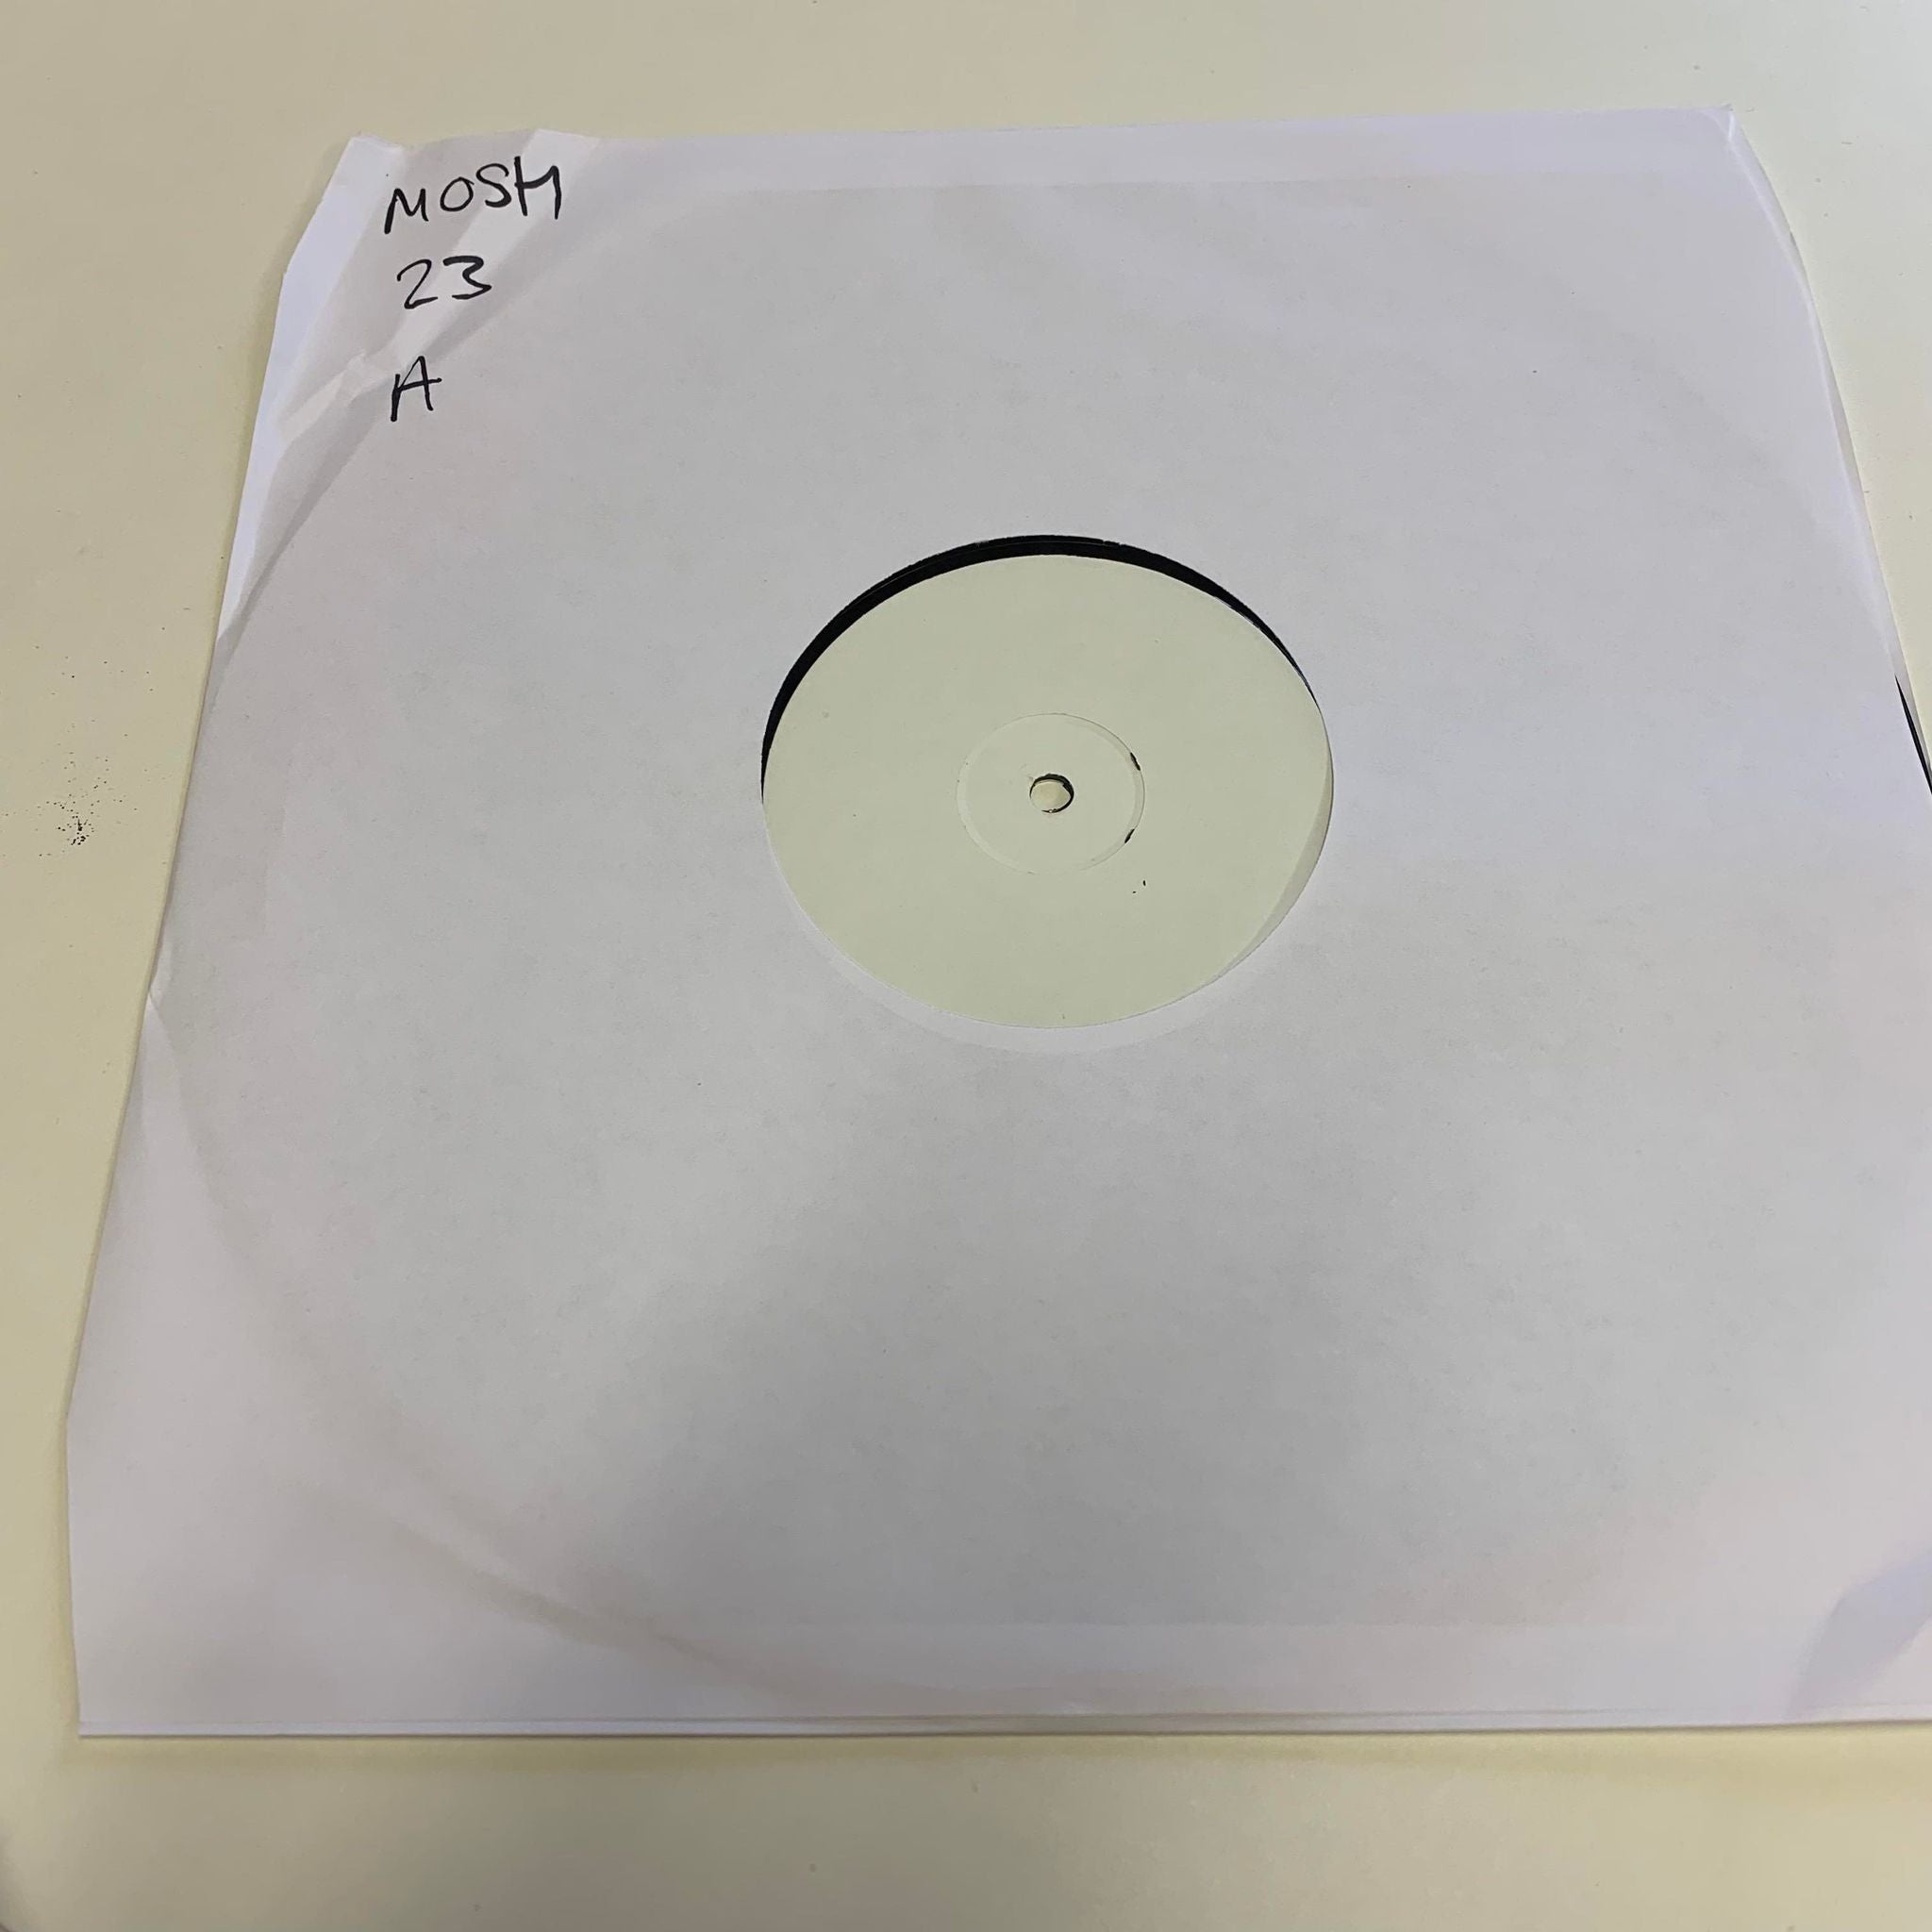 Nocturnus "The Key" 2023 FDR Test Pressing Vinyl (Ltd to 10 Copies)